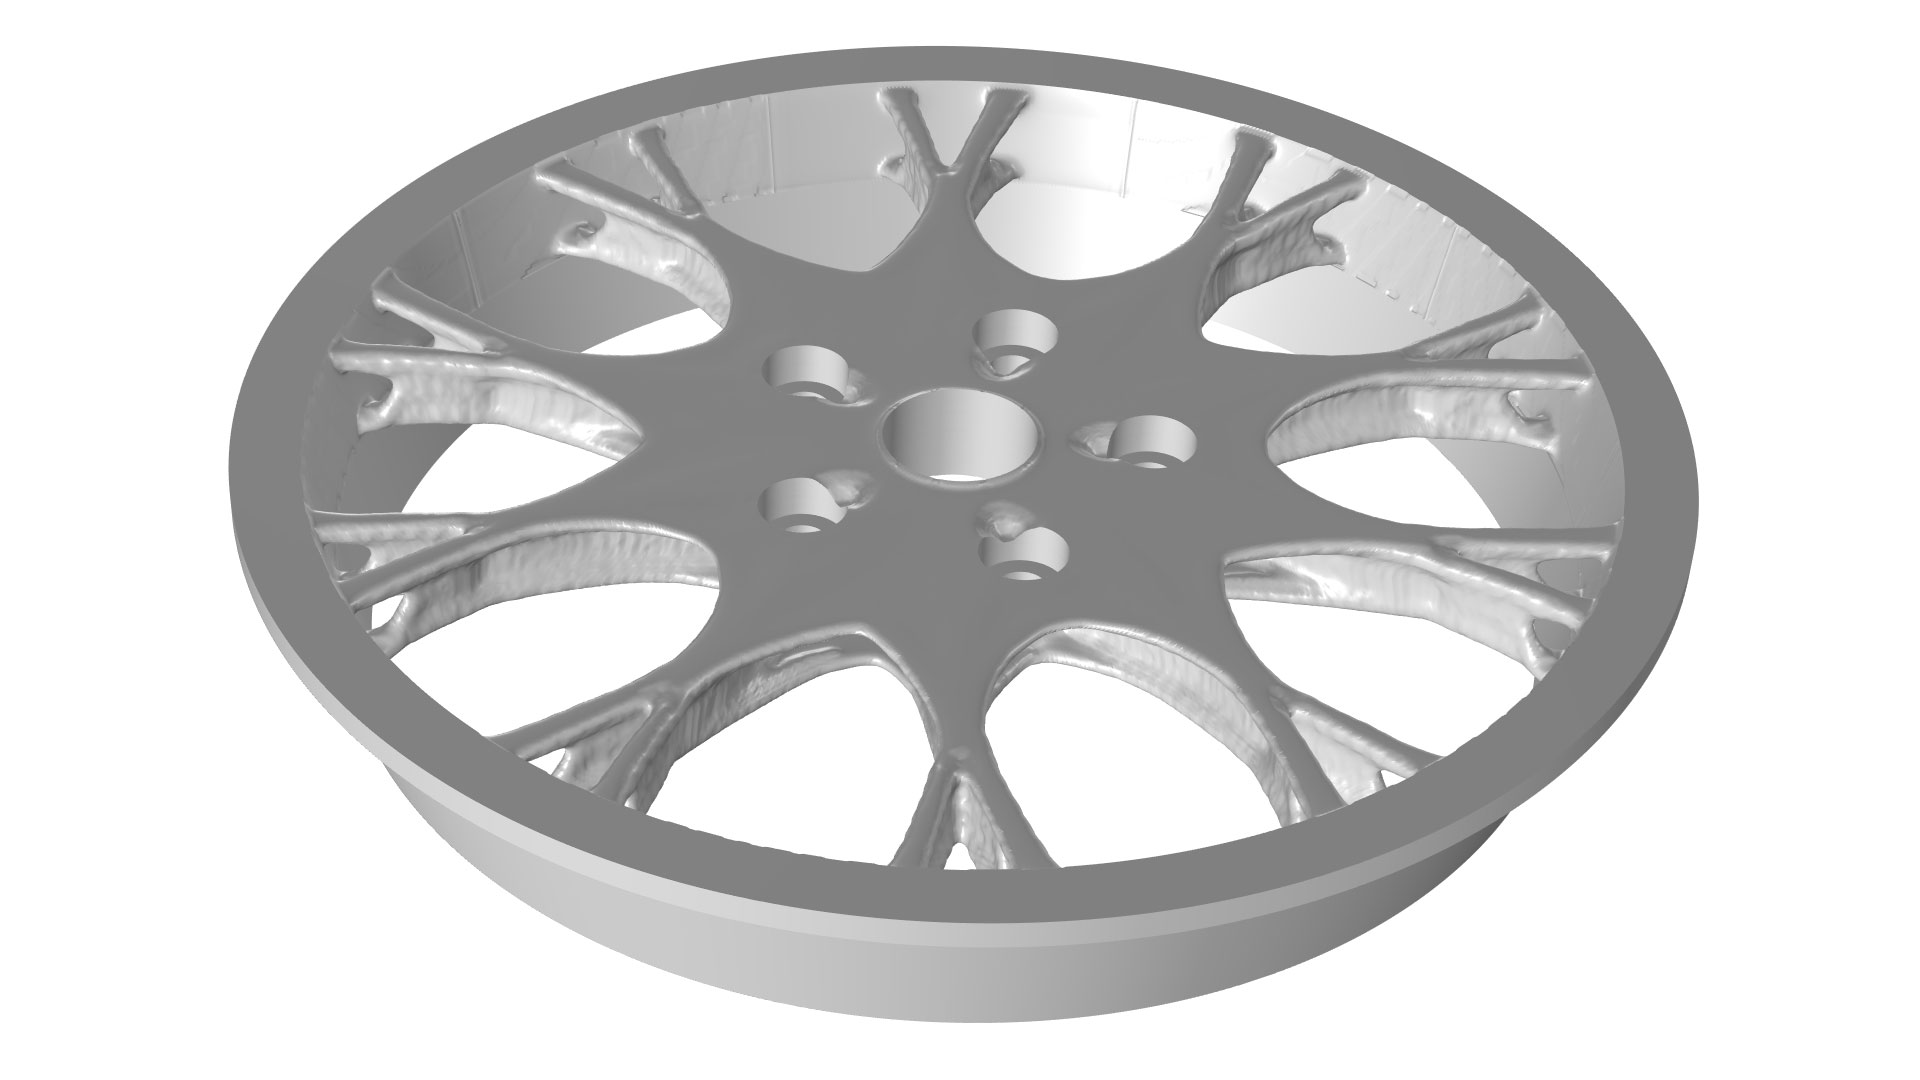 An unoptimized gray wheel rim model.